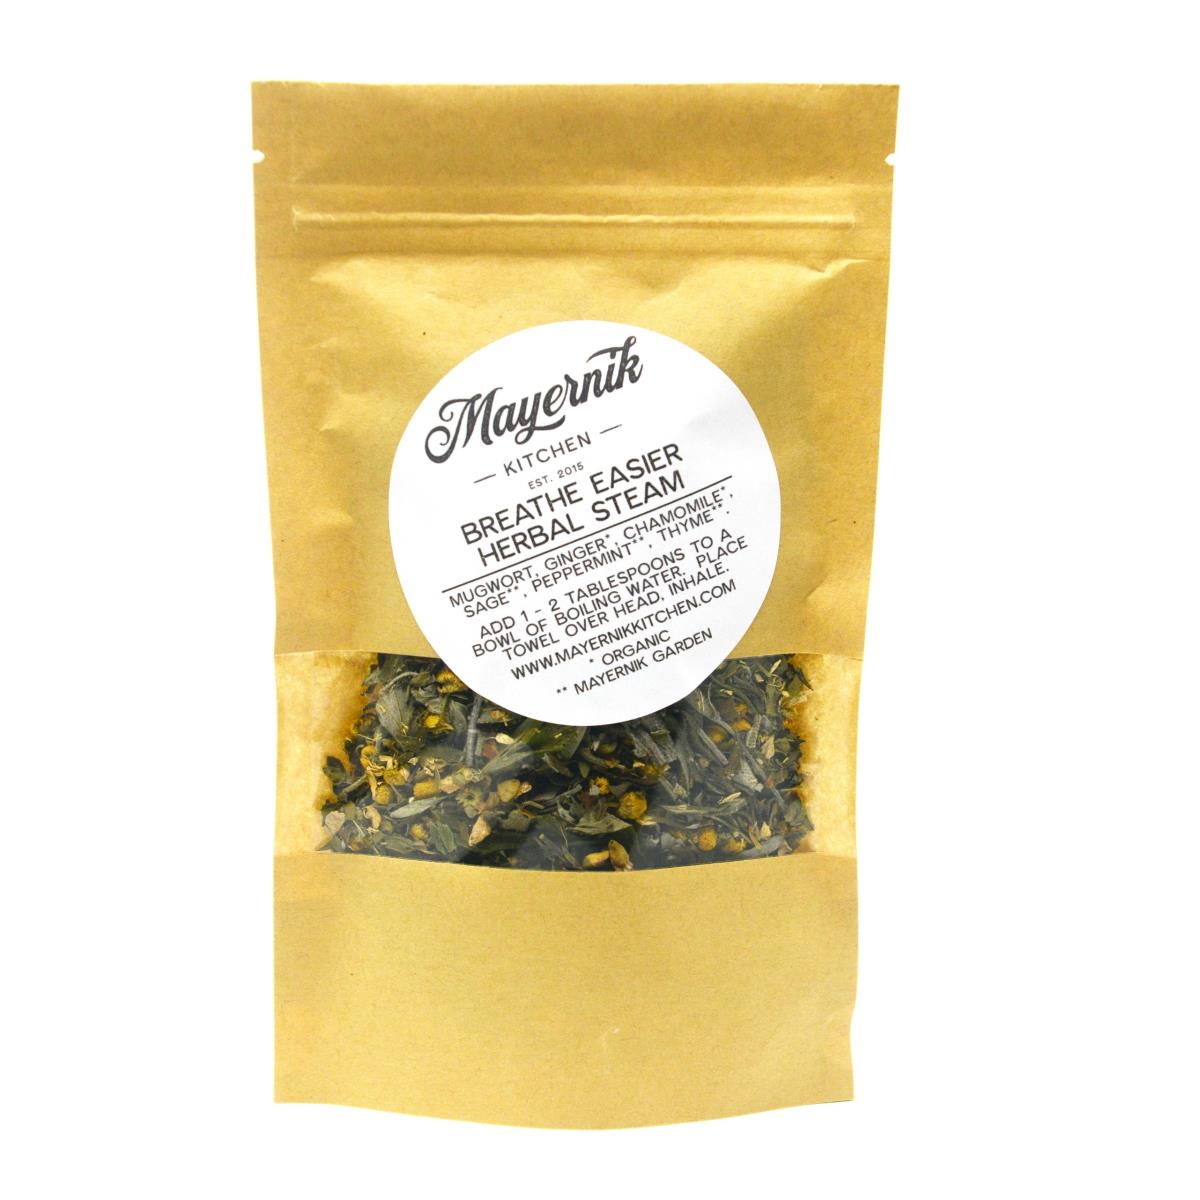 Mayernik Kitchen - New Jersey Herbal Apothecary